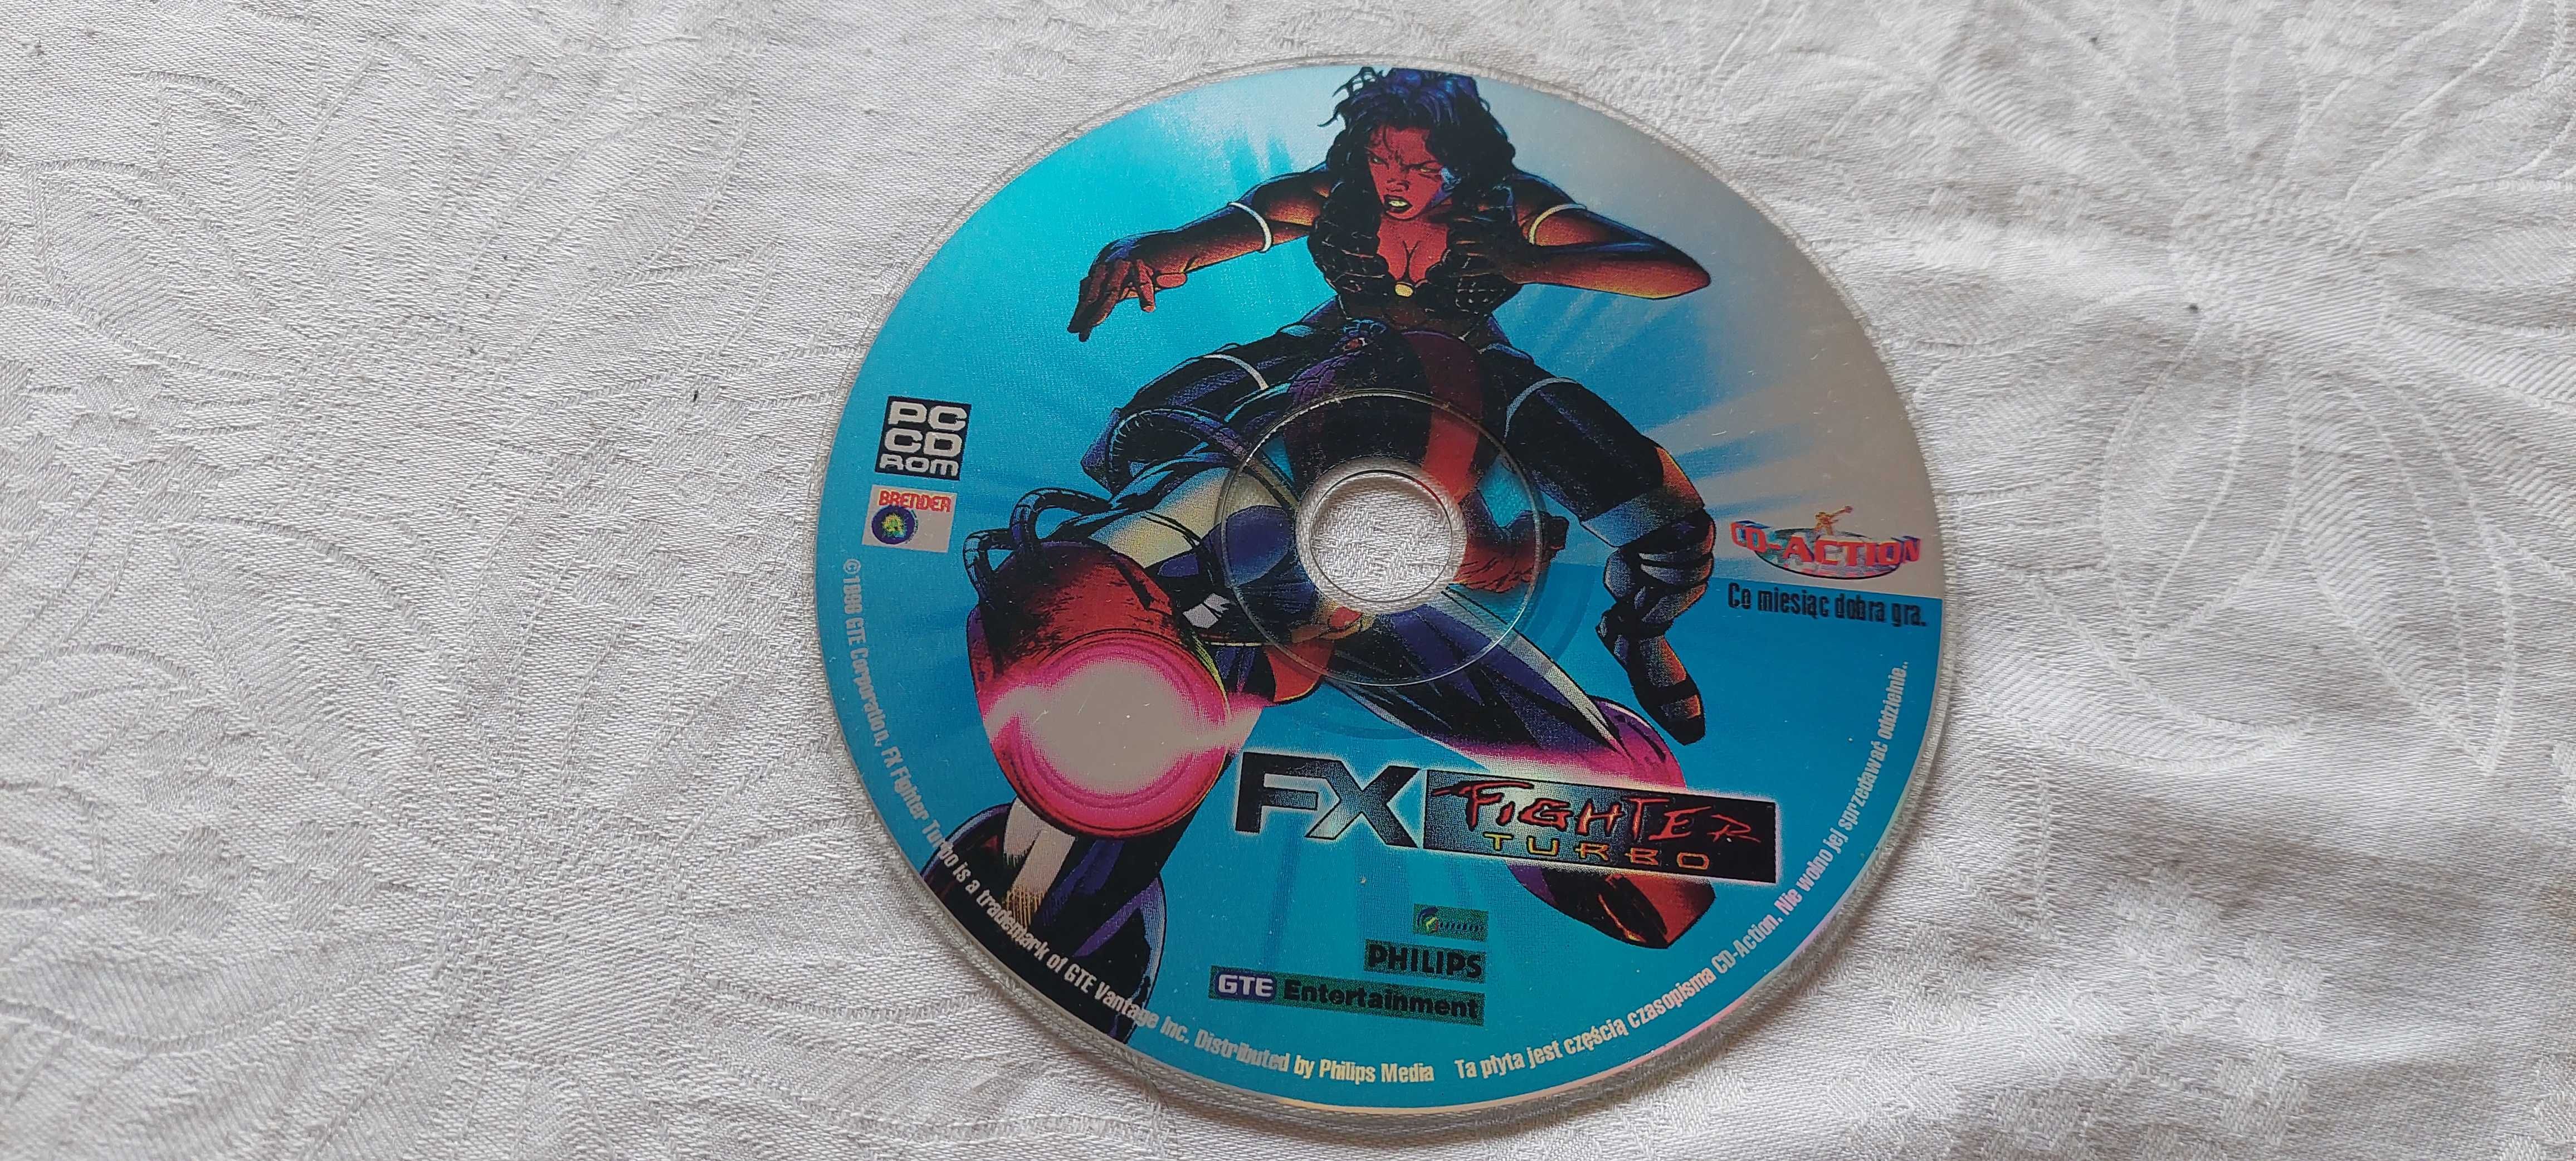 CD Action 3/1999 (nr 34) wraz z płytą FX Fighter